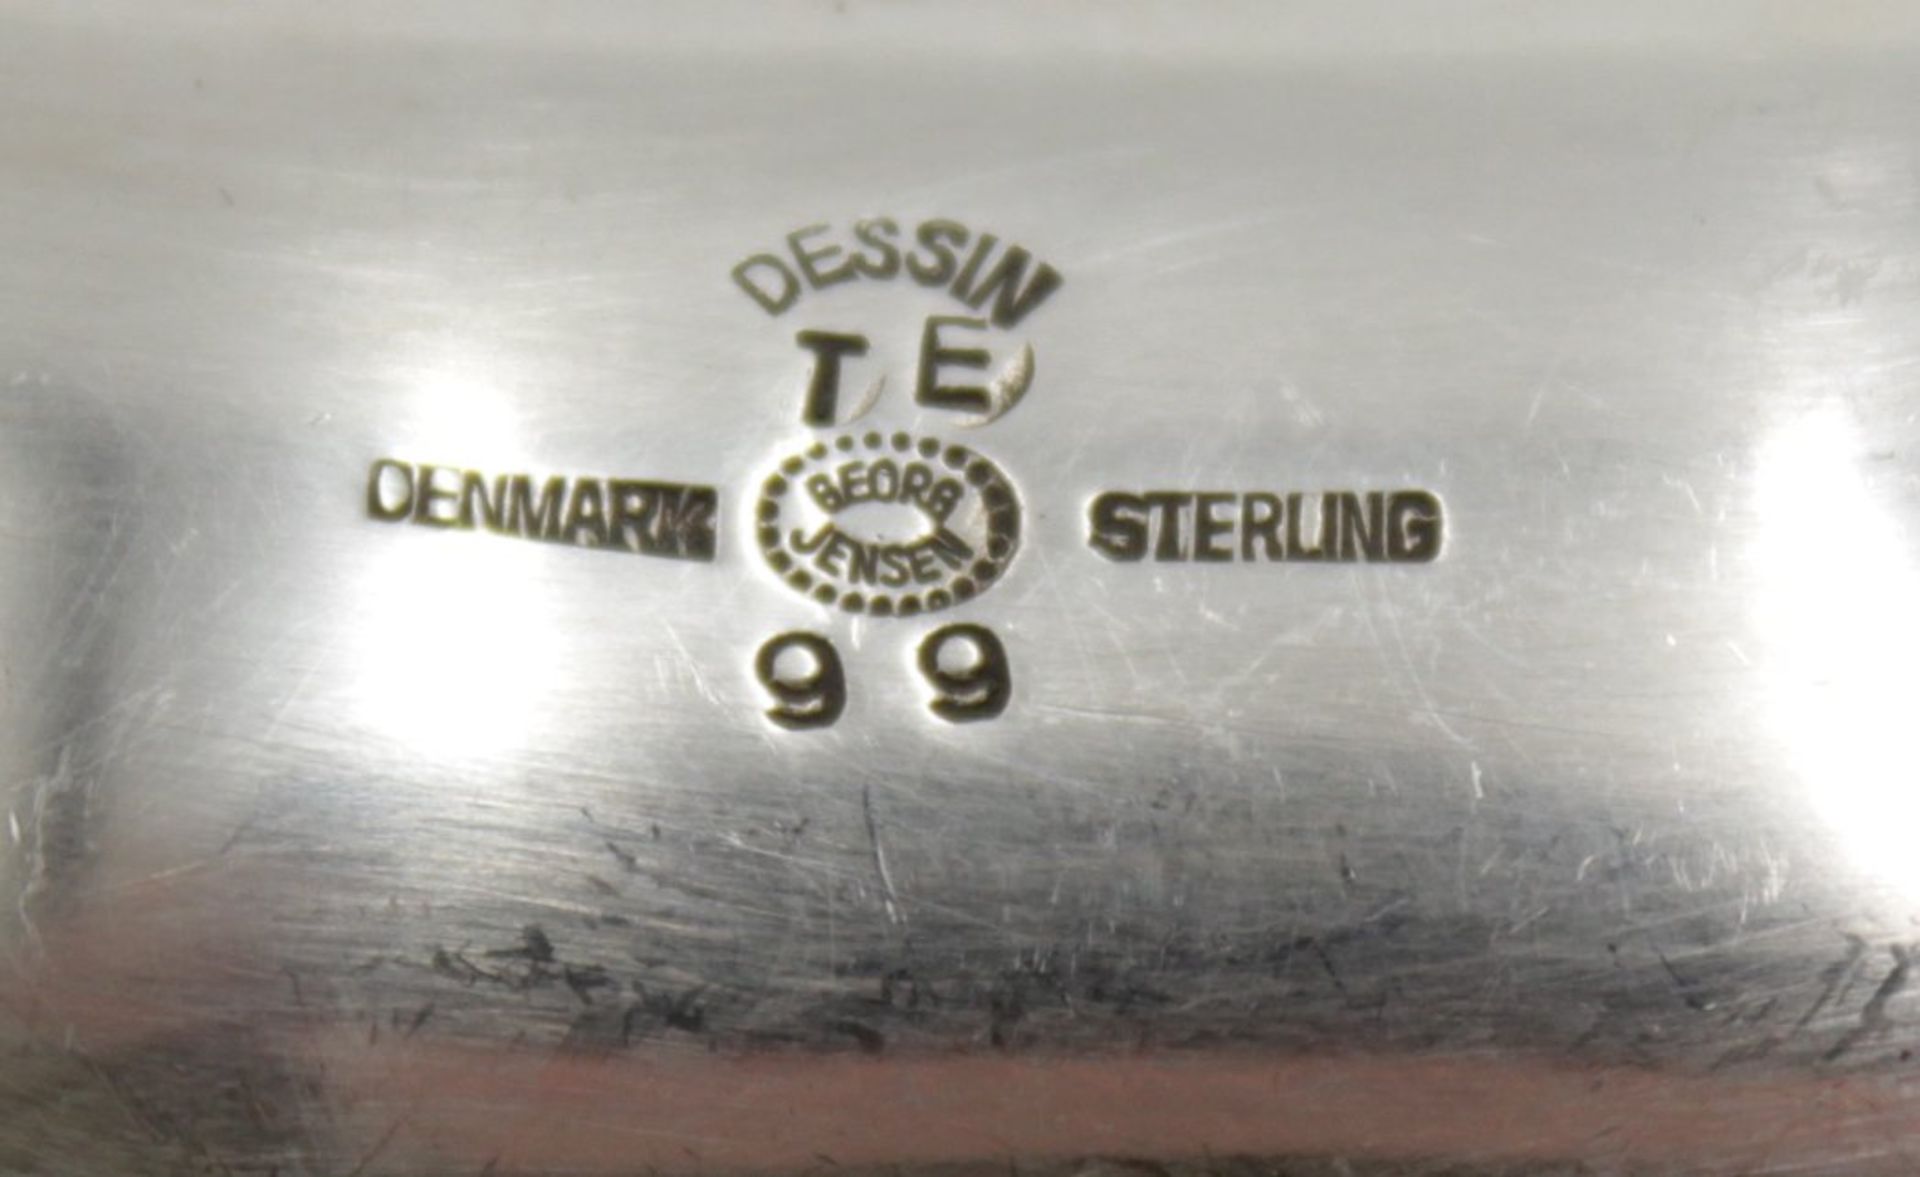 Serviettenring, Georg Jesnen, Sterling, Nr. 99, 36,25gr., 5,3 x 3,2cm. - Image 3 of 3